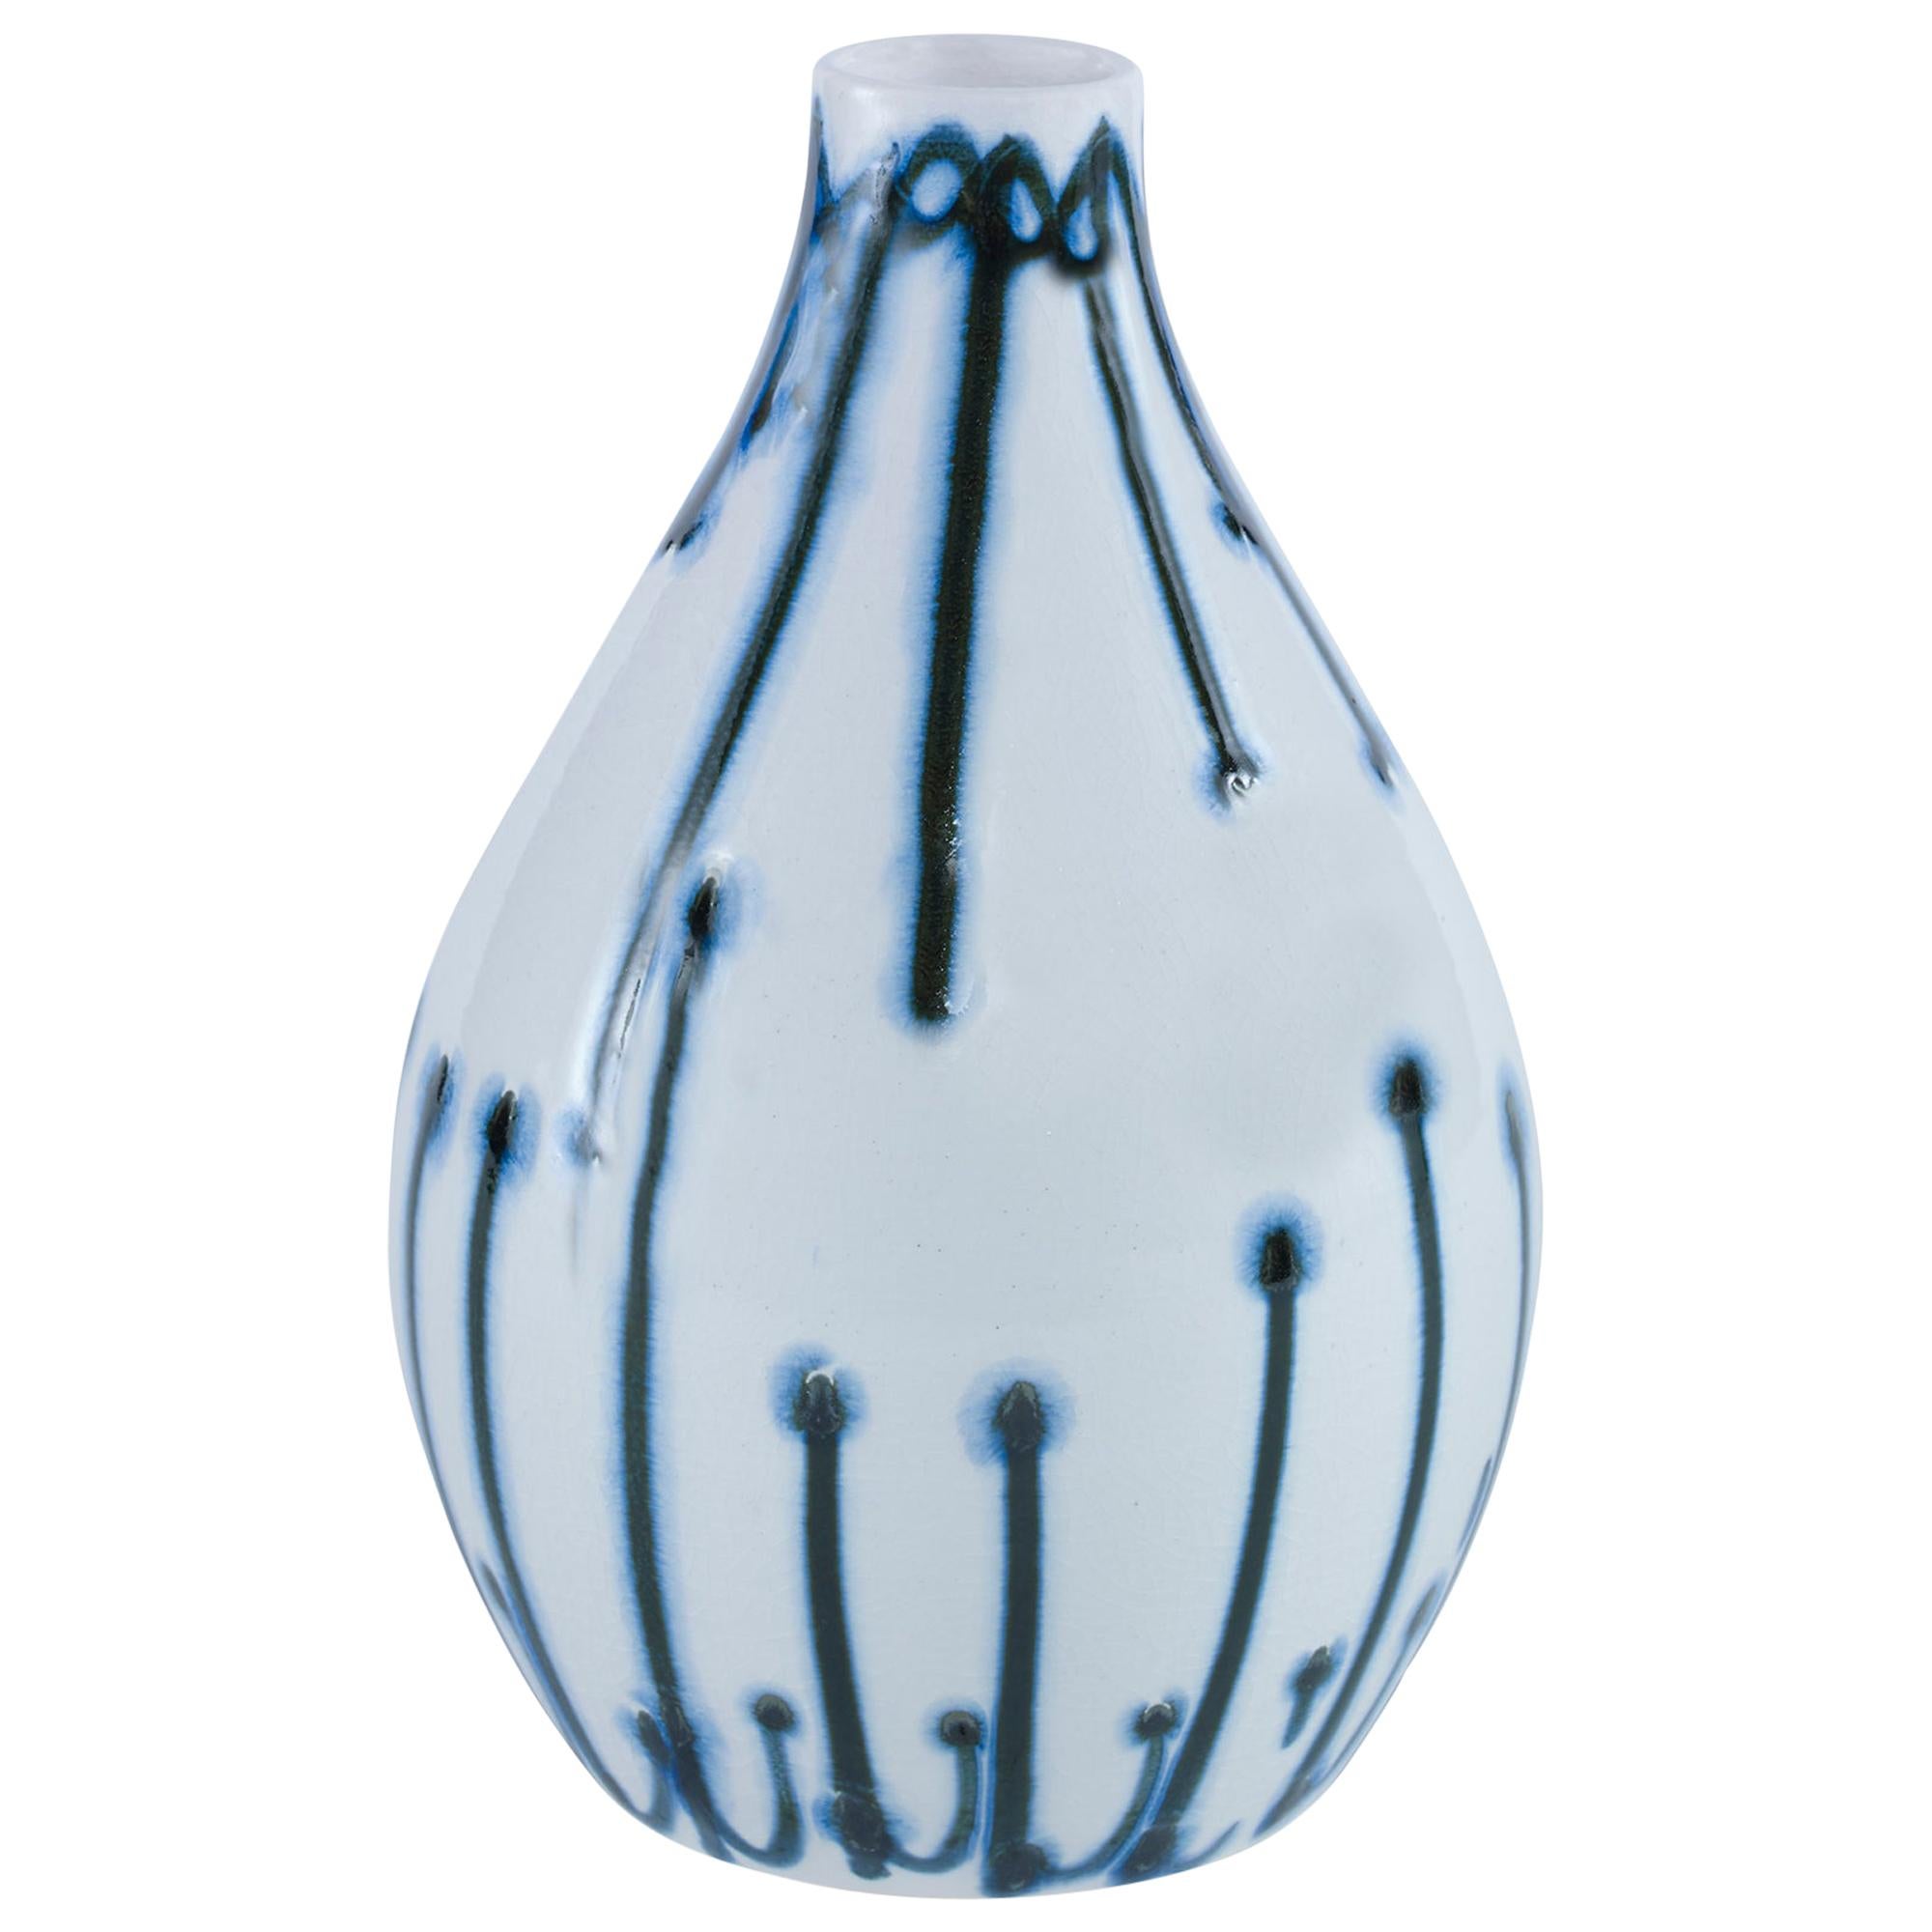 Mira Small Vase in Blue Ceramic by CuratedKravet